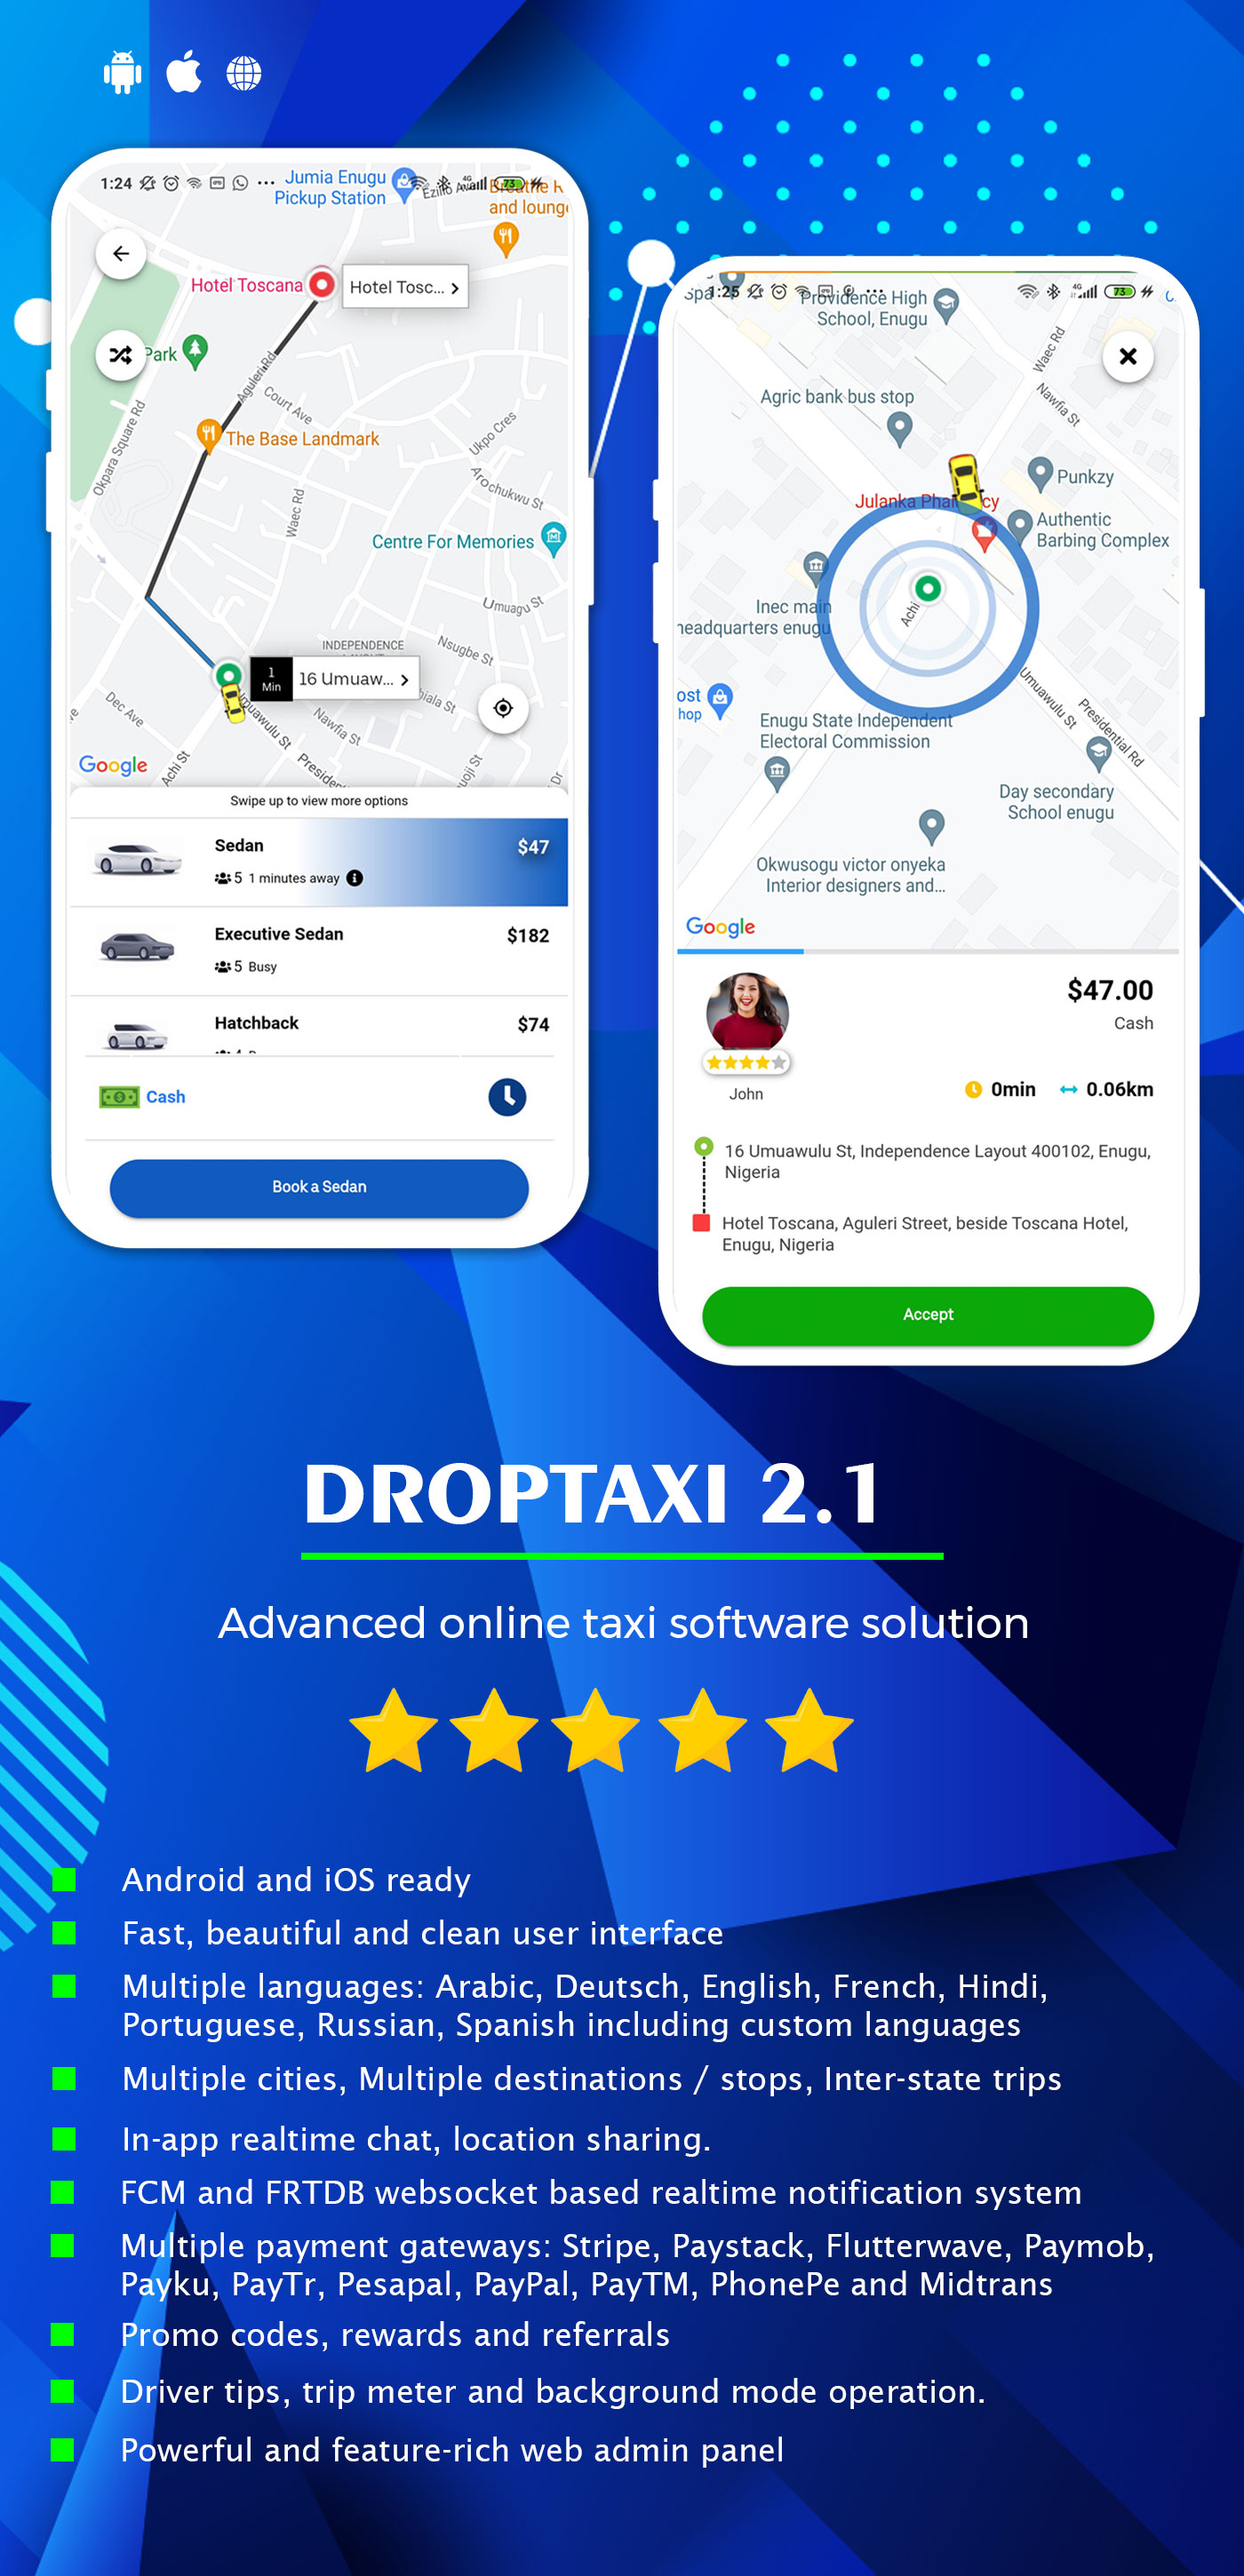 Droptaxi white label taxi app software script - 1